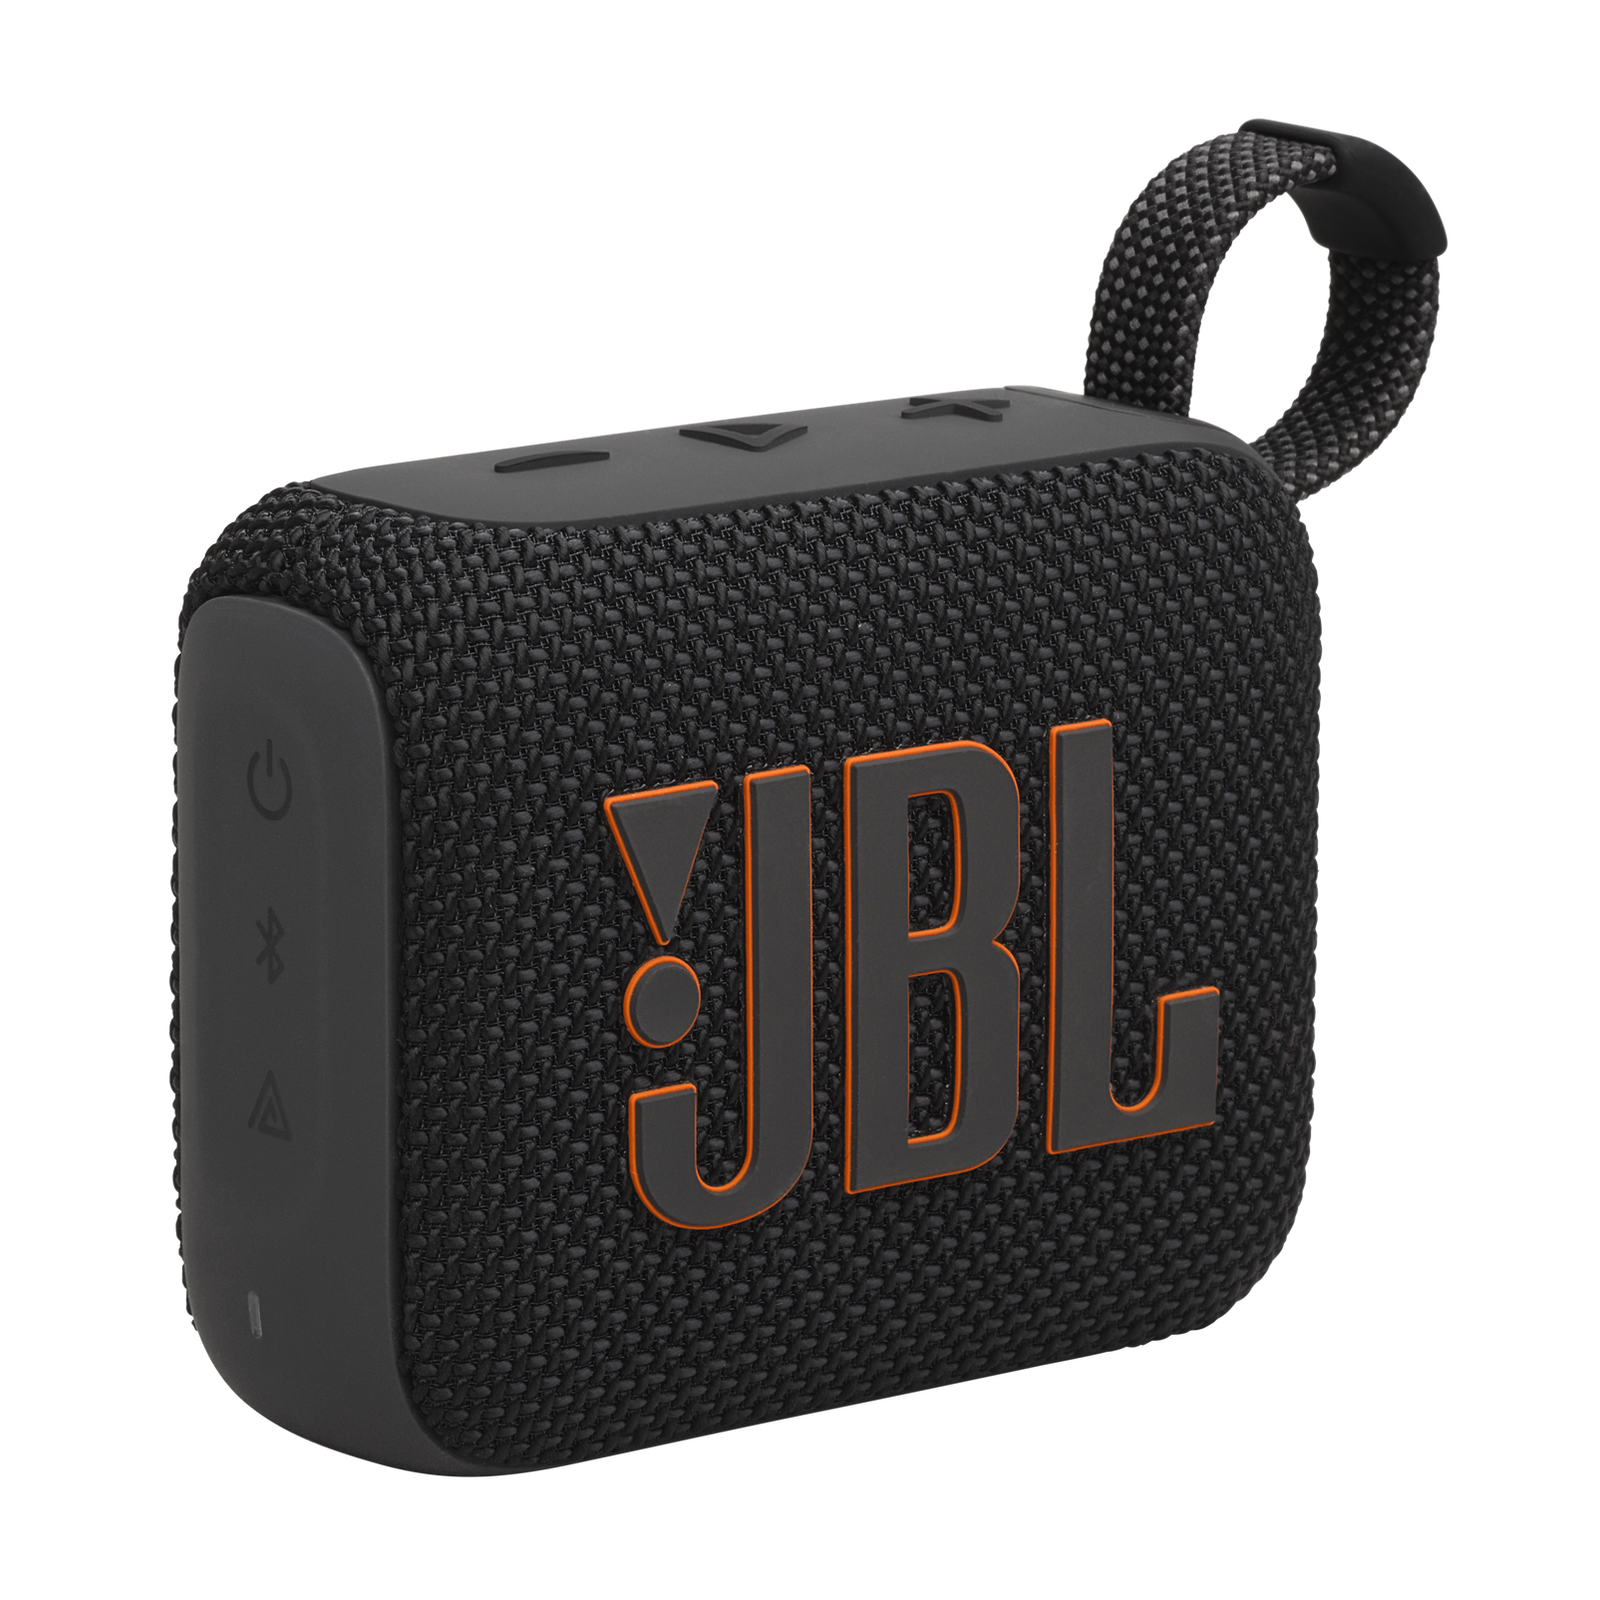 JBL Go 4 Black Bluetooth Speaker